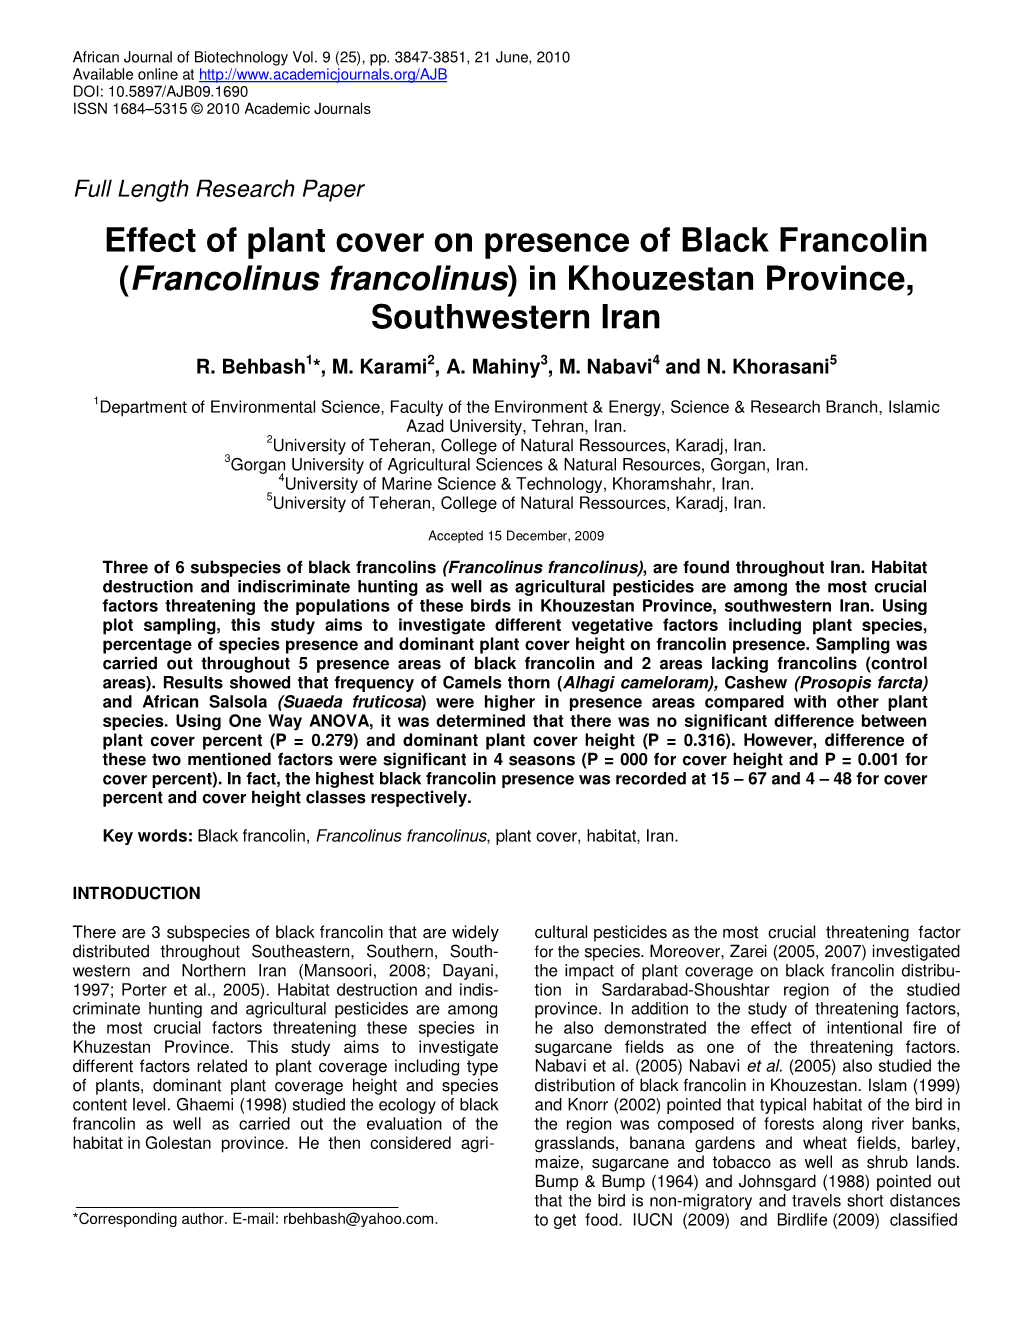 Effect of Plant Cover on Presence of Black Francolin (Francolinus Francolinus ) in Khouzestan Province, Southwestern Iran